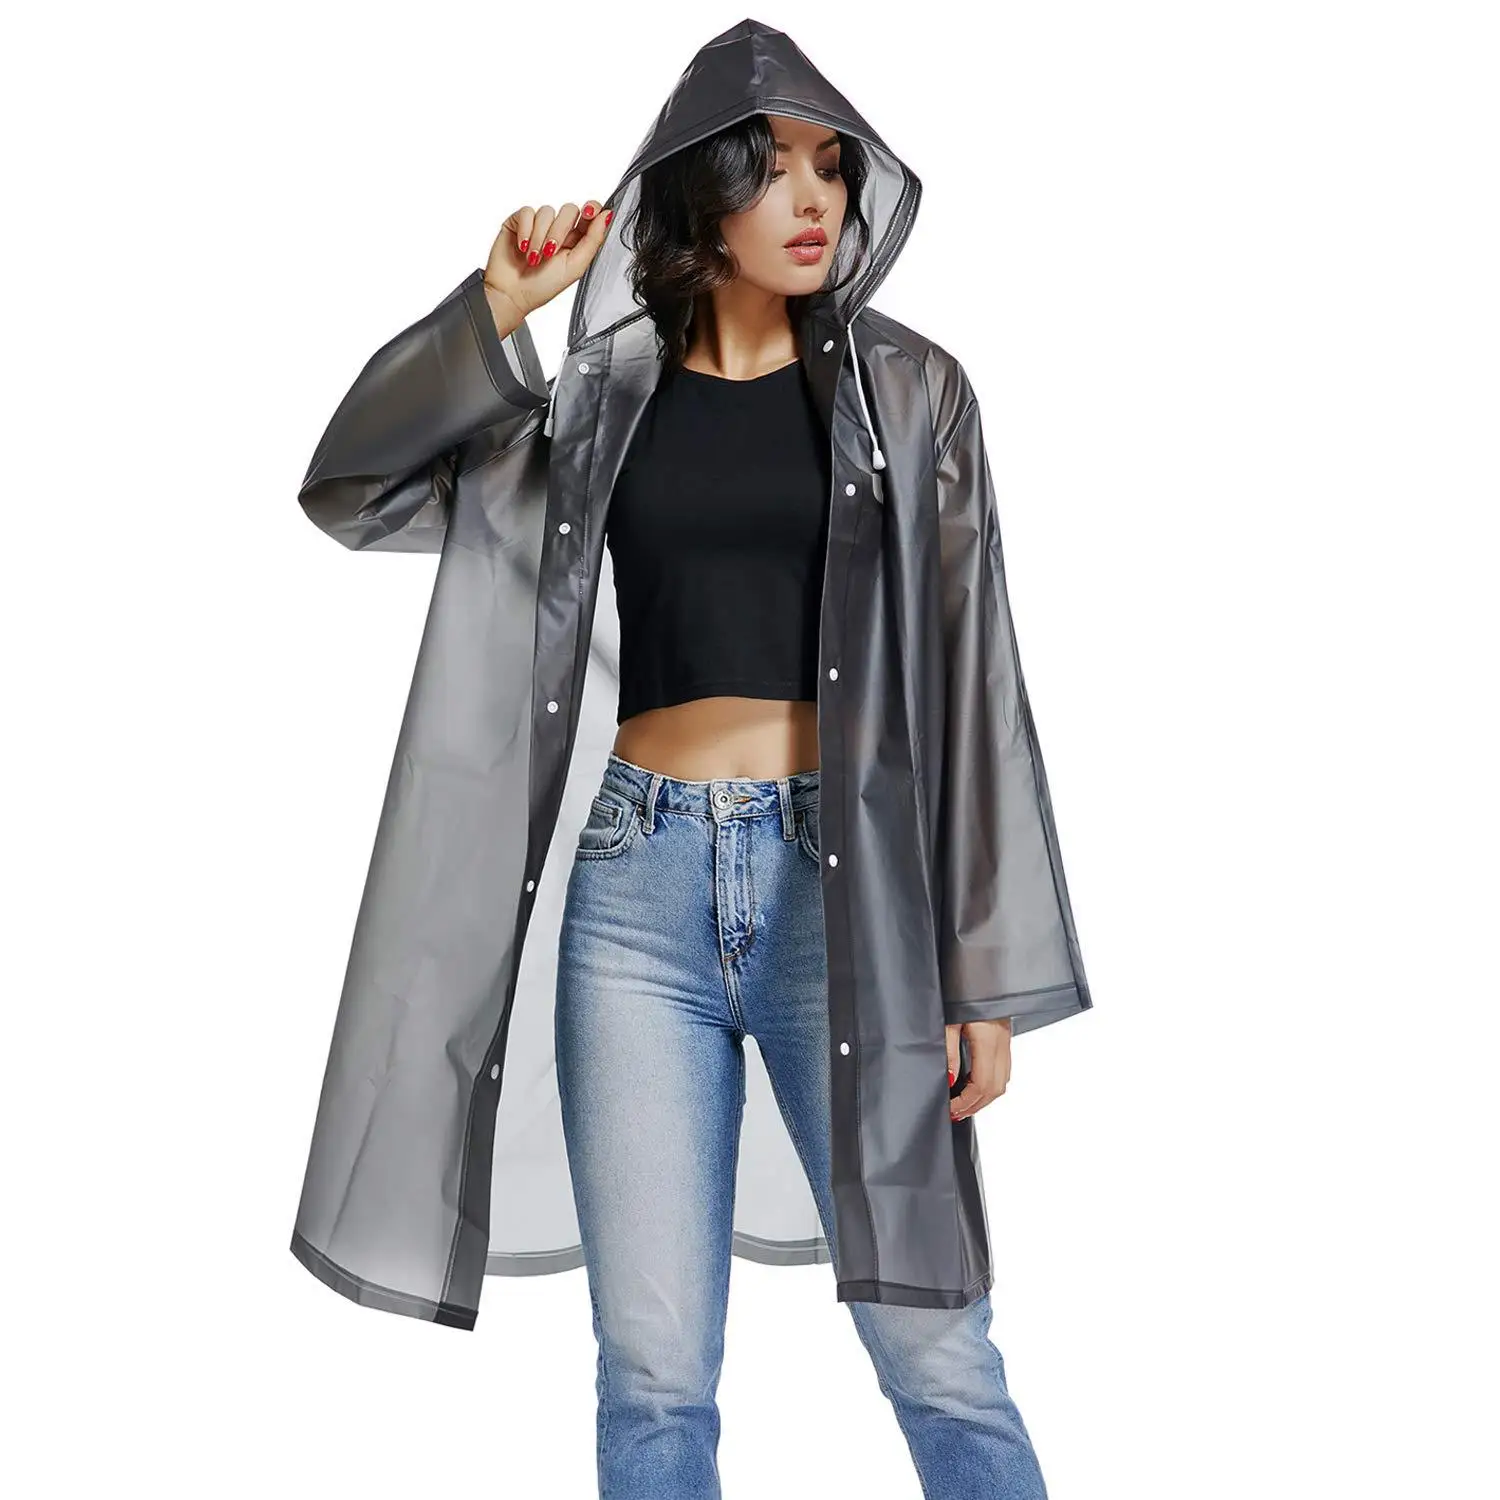 

EVA Thicken Fashion Unisex Fashion Personality Raincoat Rain Cape for Men and Women